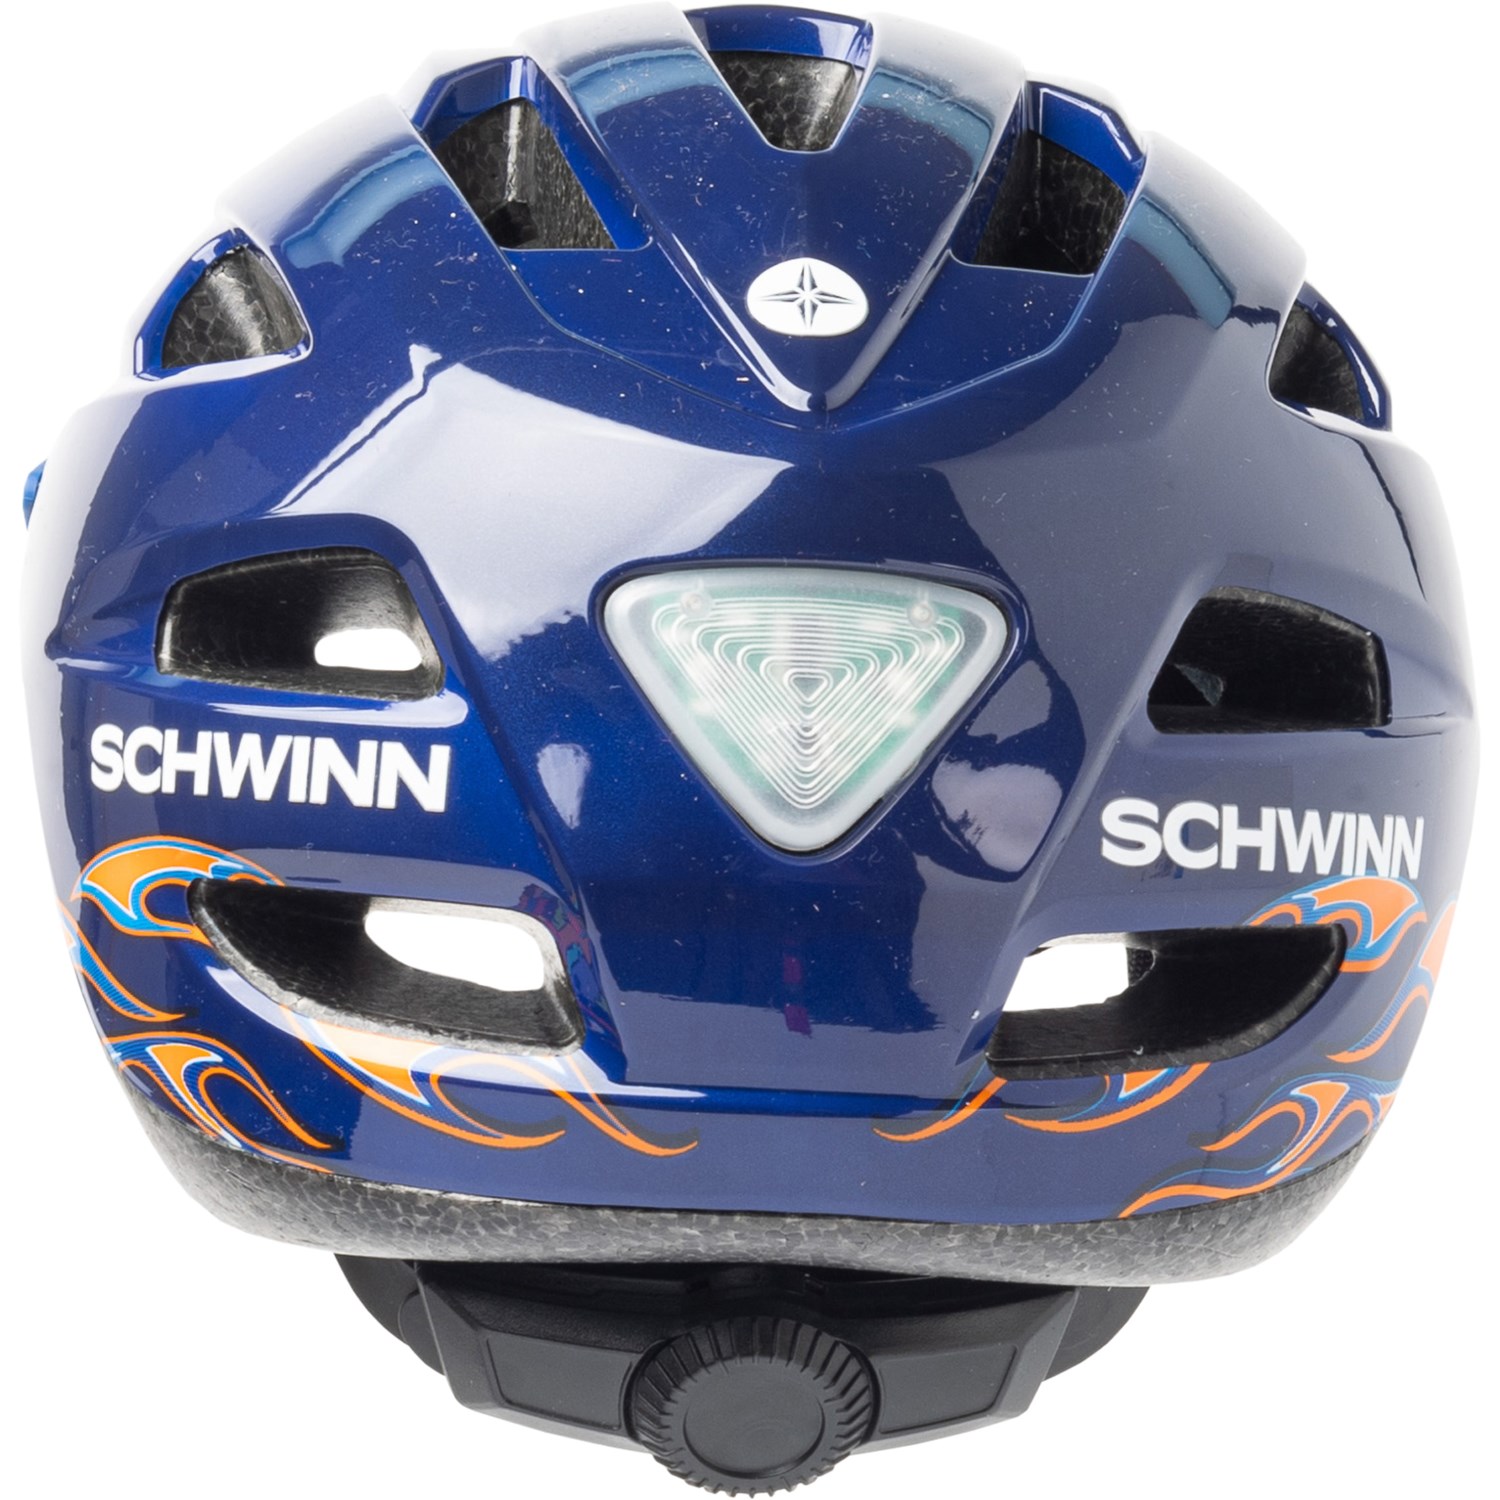 Schwinn Radiant Bike Helmet